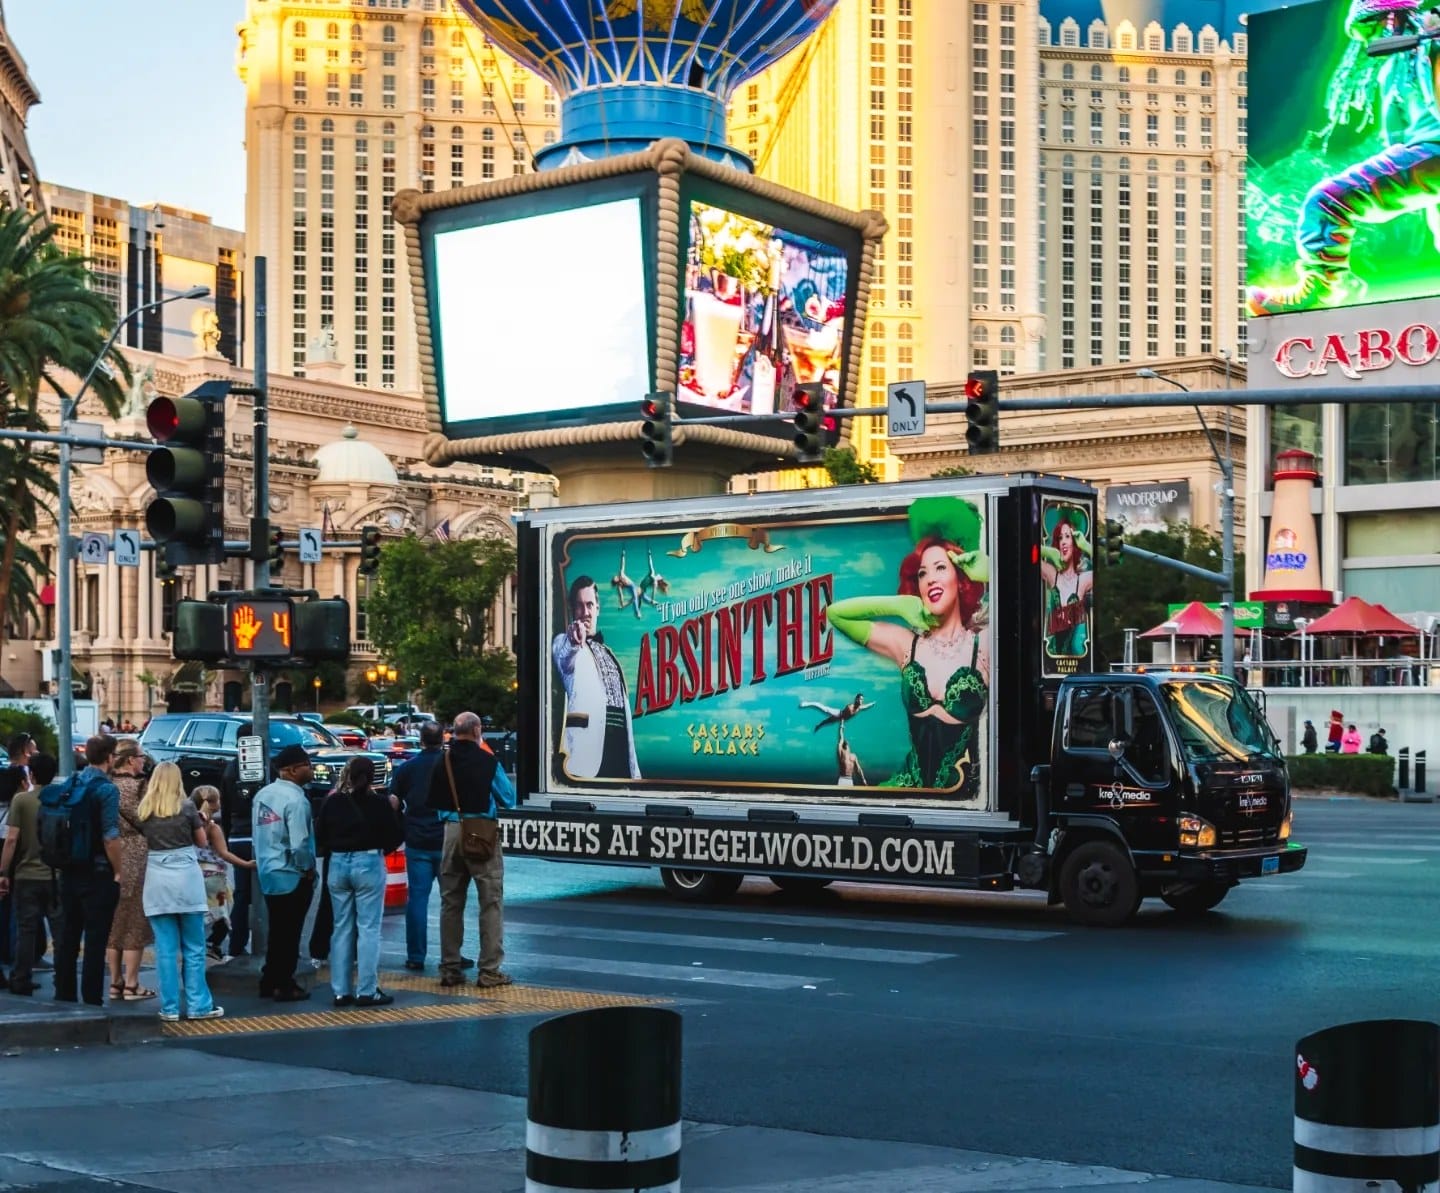 Mobile billboard advertising show on Las Vegas street.